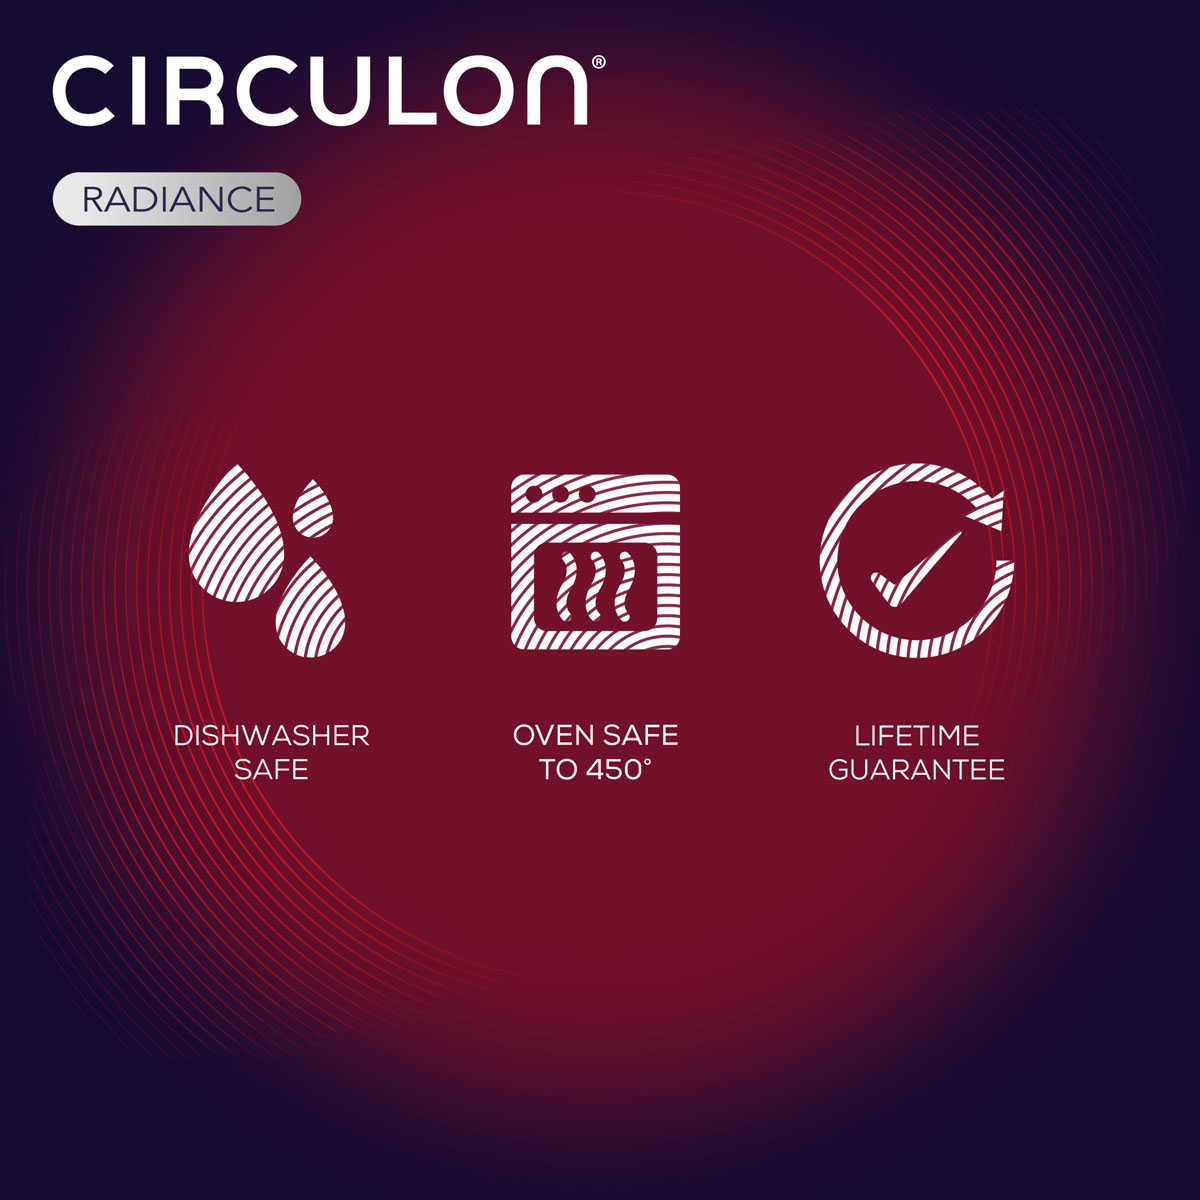 Circulon(R) Radiance 3pc. Hard-Anodized Non-Stick Frying Pan Set